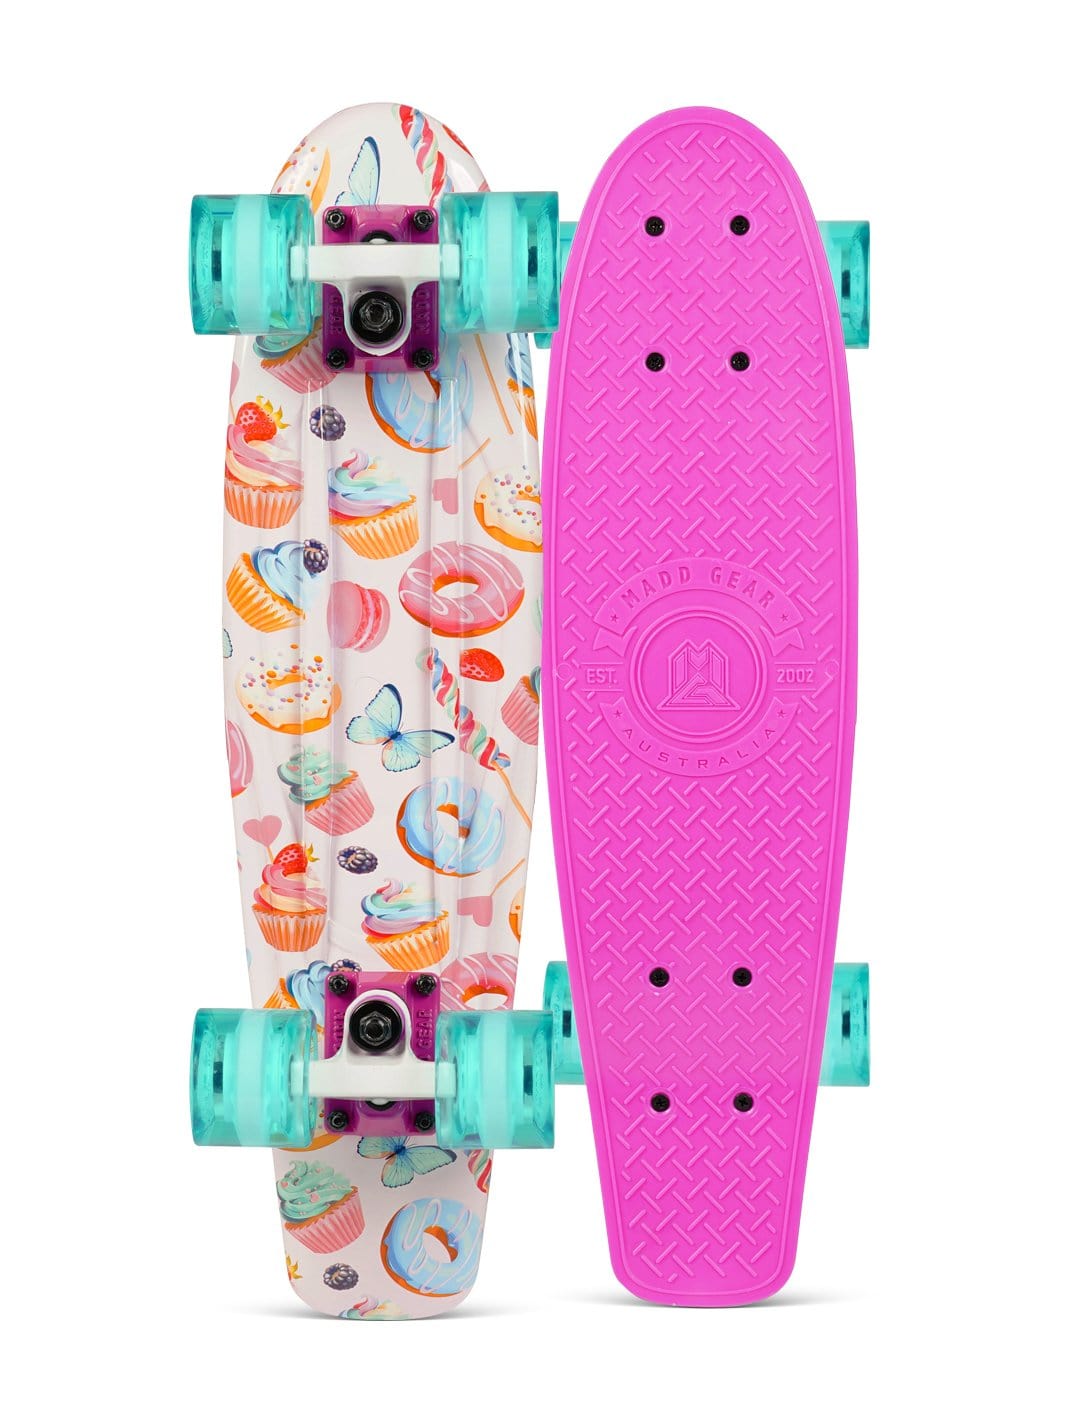 Madd Gear Retro Board Skateboard Penny 22" Plastic Flexible Kids Children Complete High Quality Donuts